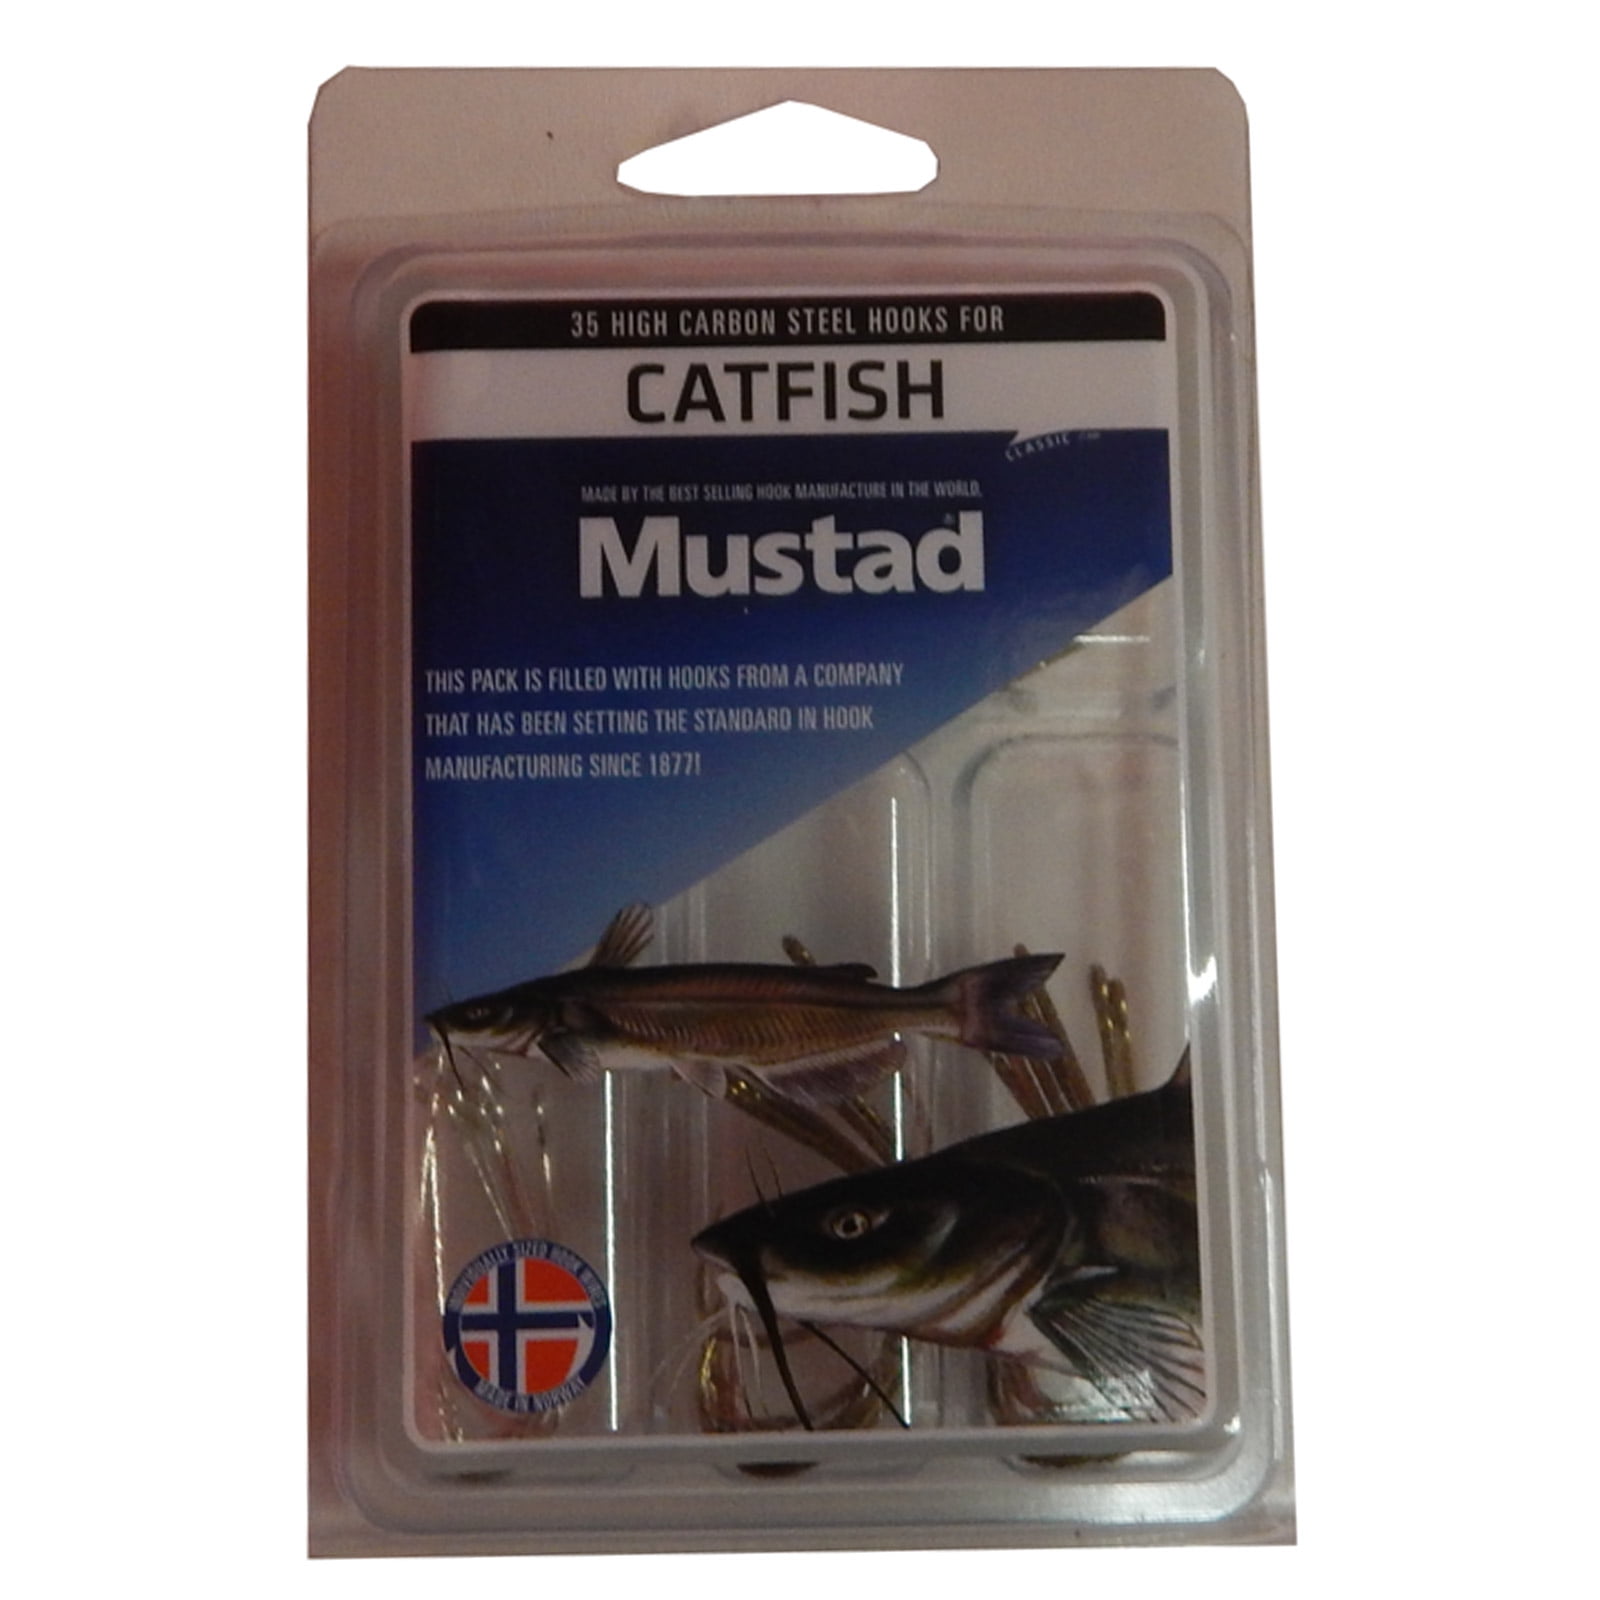 Mustad Assorted Catfish Hook Kit - Asstd 35pc